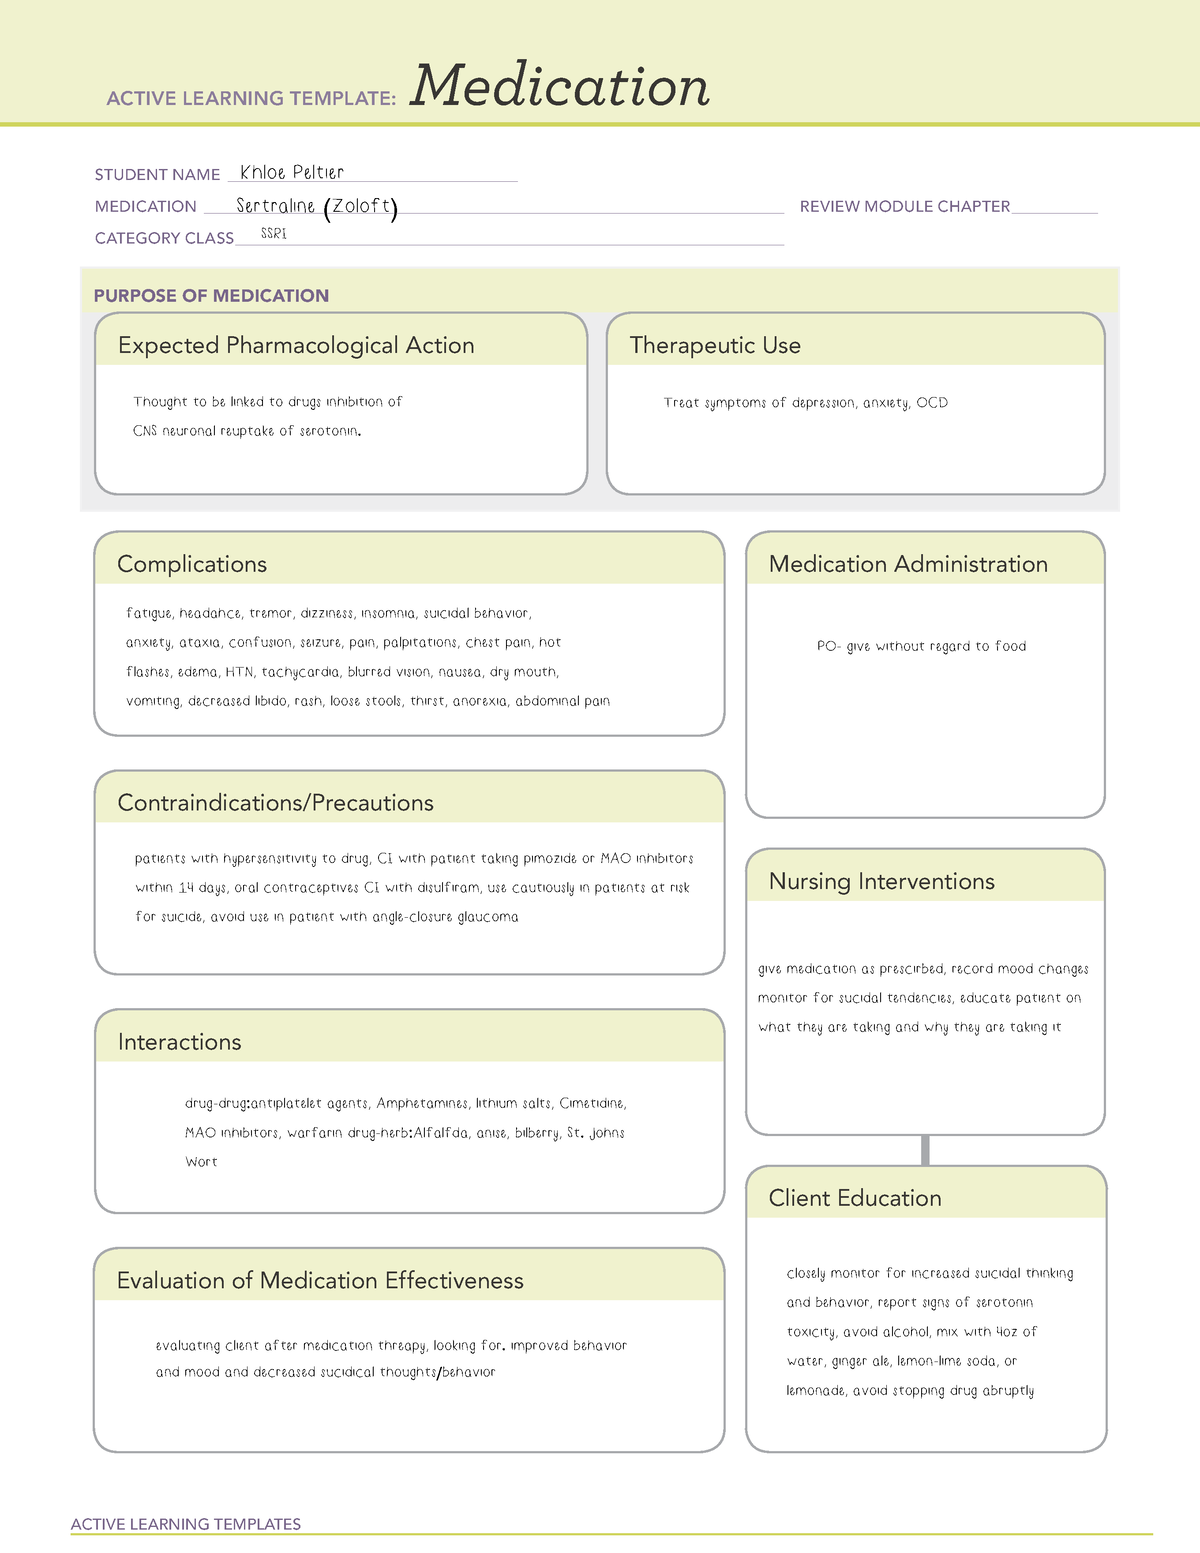 sertraline-medication-card-active-learning-templates-medication